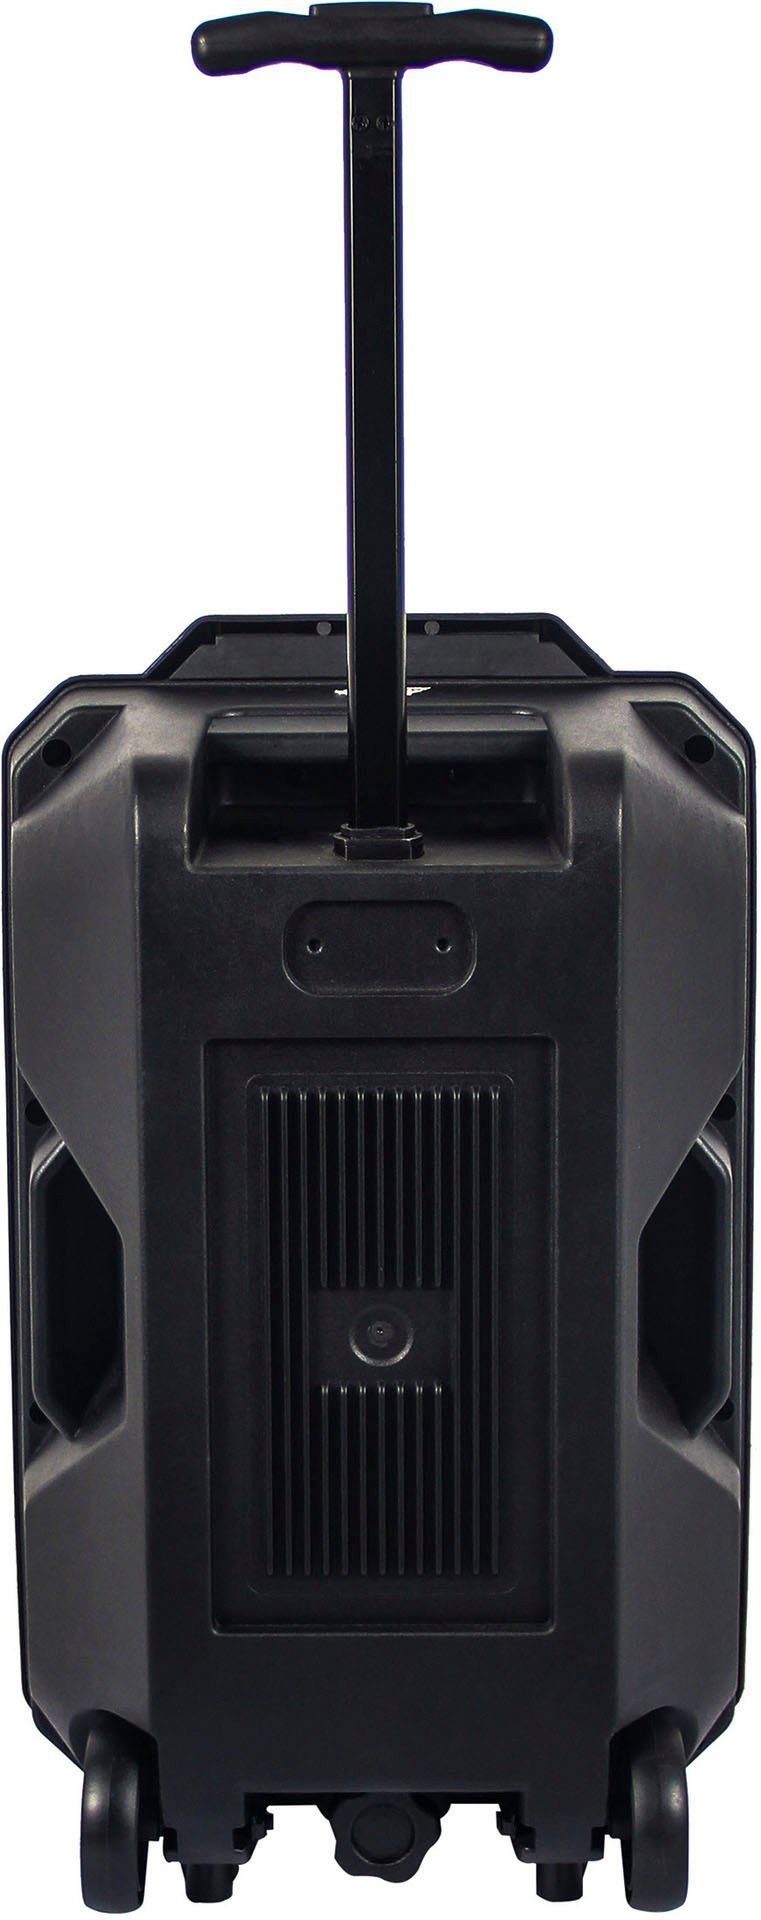 TSP-120 Denver W) Portable-Lautsprecher (Bluetooth, 8